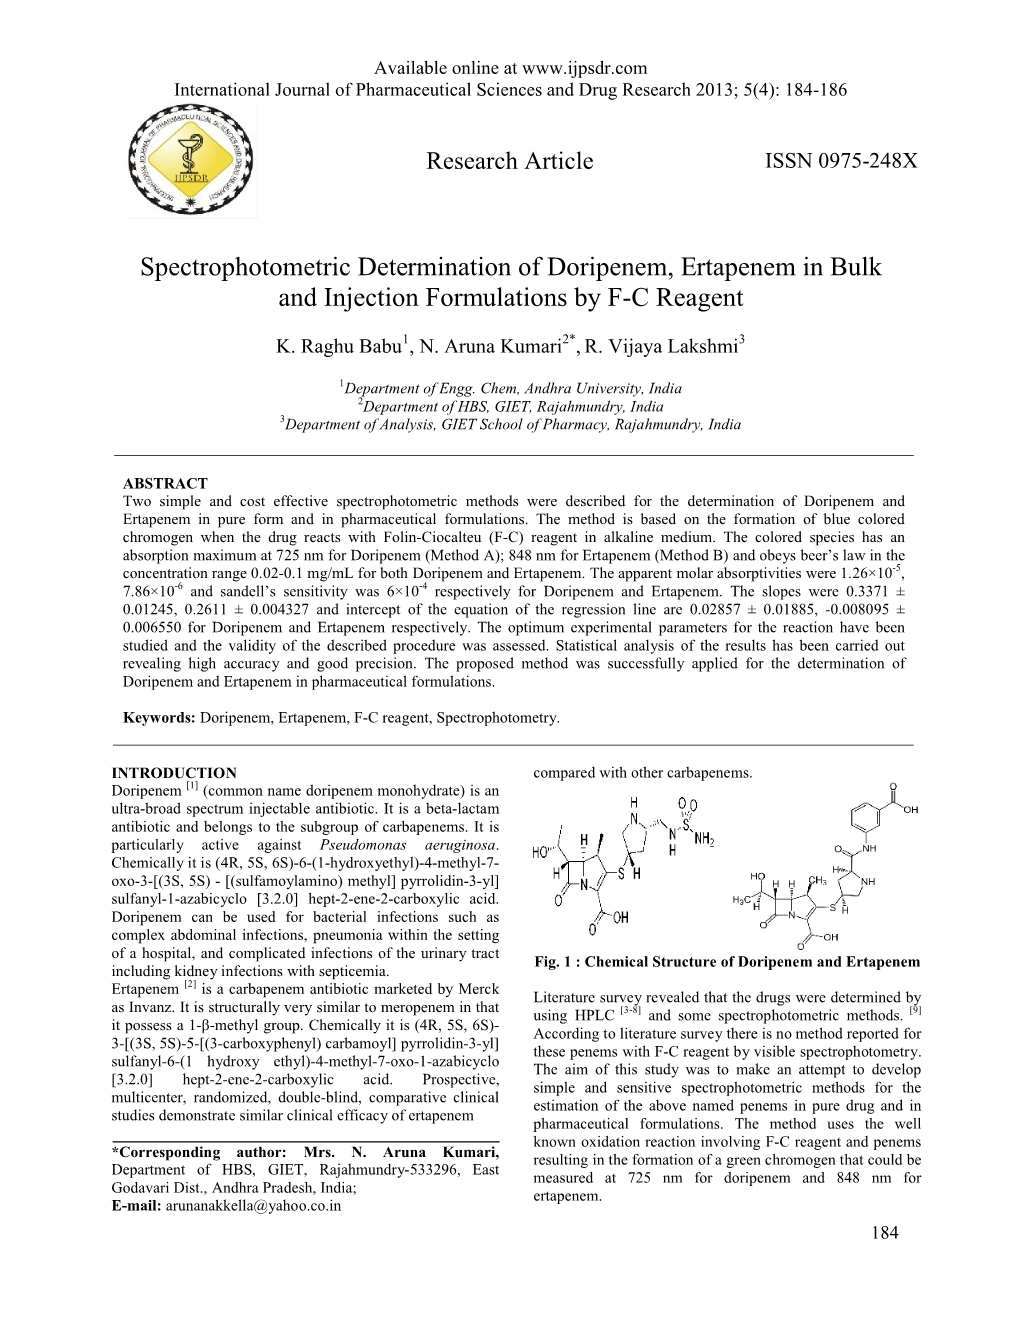 Spectrophotometric Determination of Doripenem, Ertapenem in Bulk and Injection Formulations by F-C Reagent